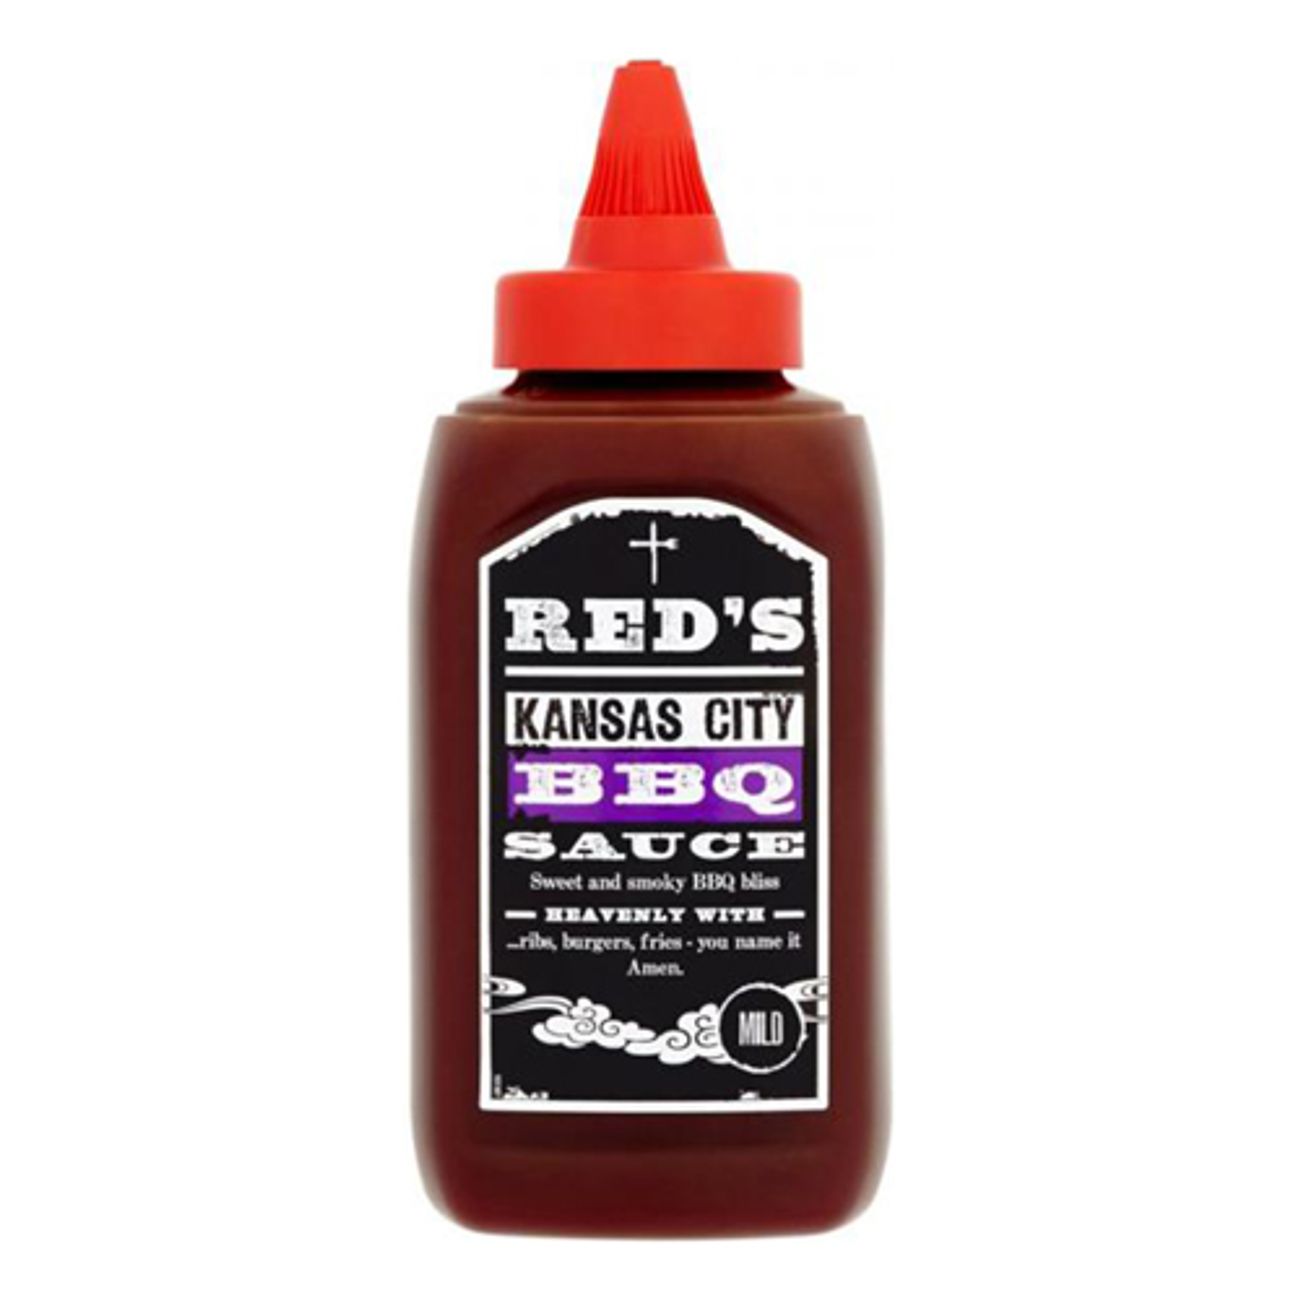 reds-kansas-city-bbq-sauce-1